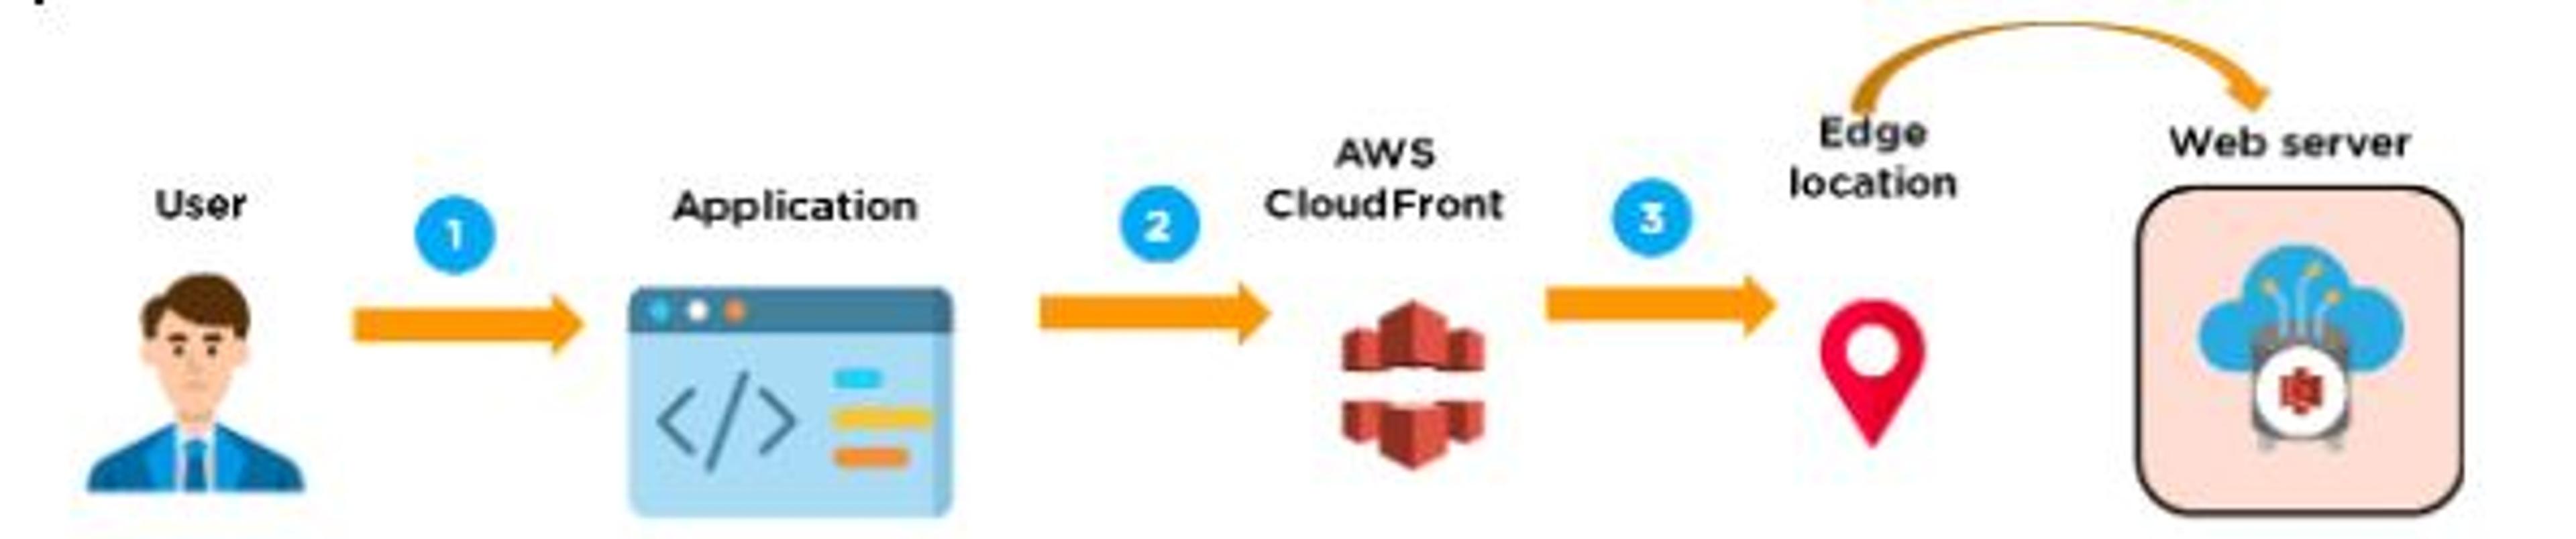 web-server-cloudfront